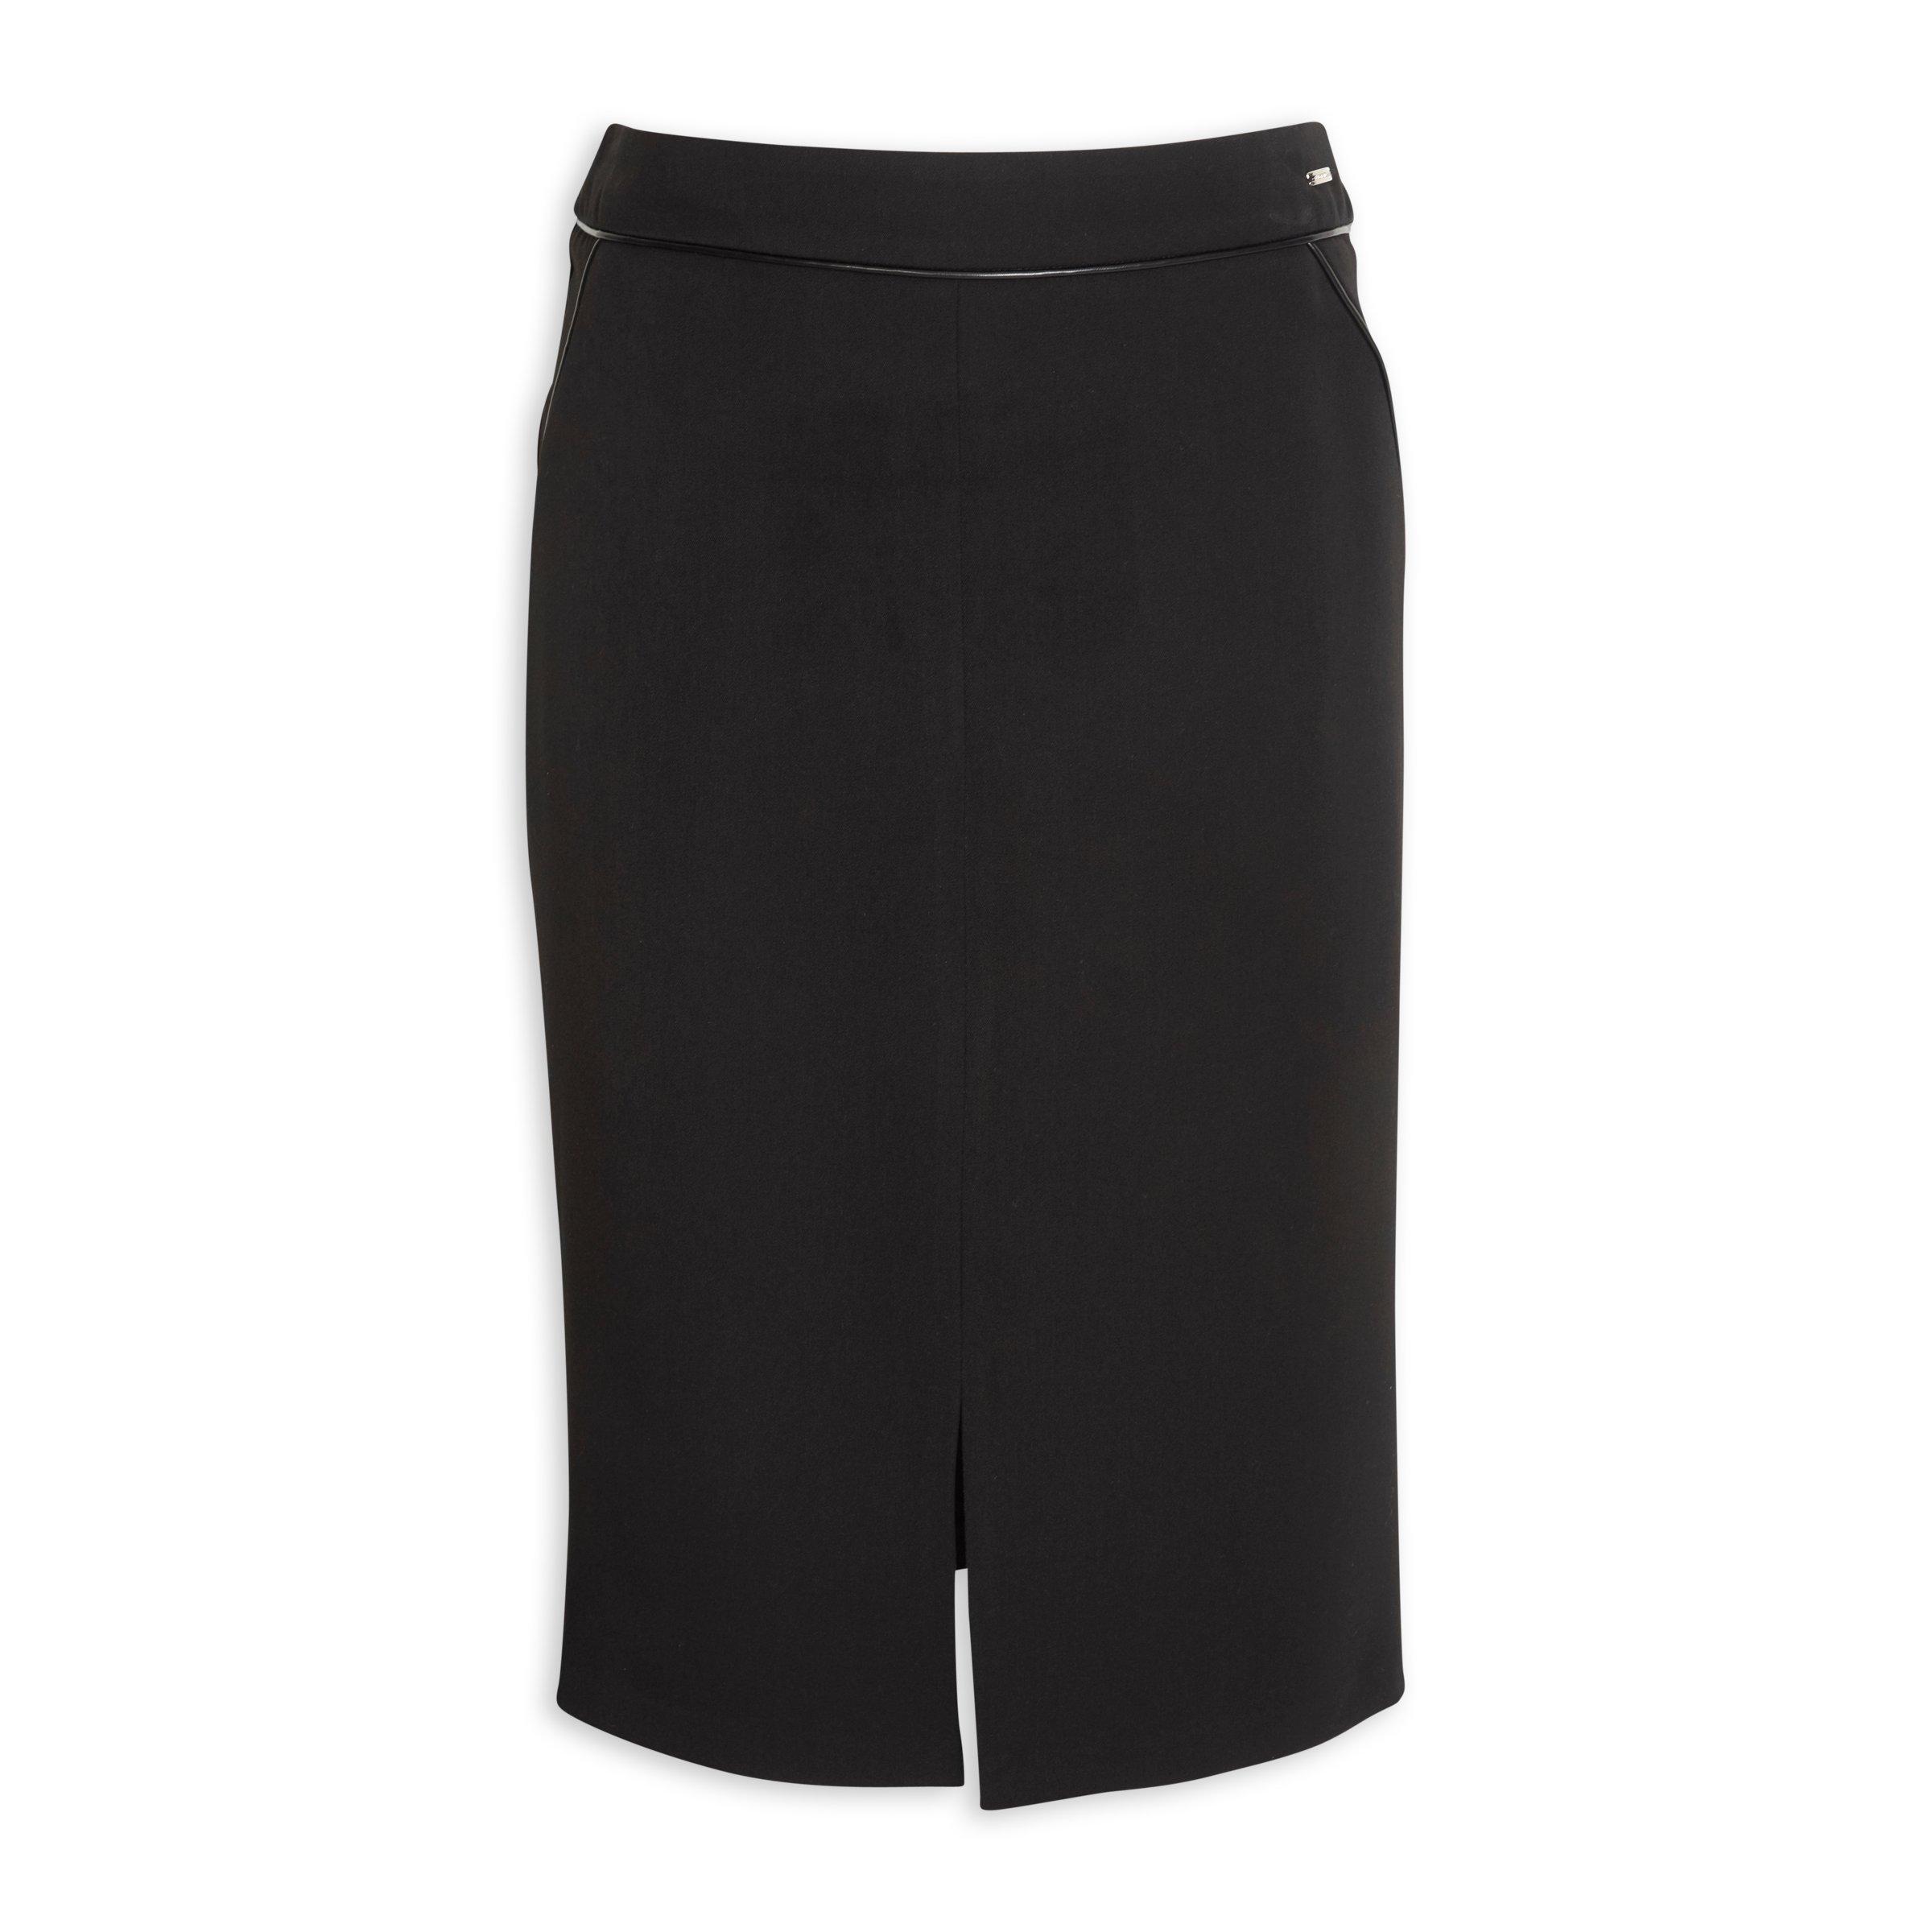 Buy Finnigans Black Pencil Skirt Online | Truworths